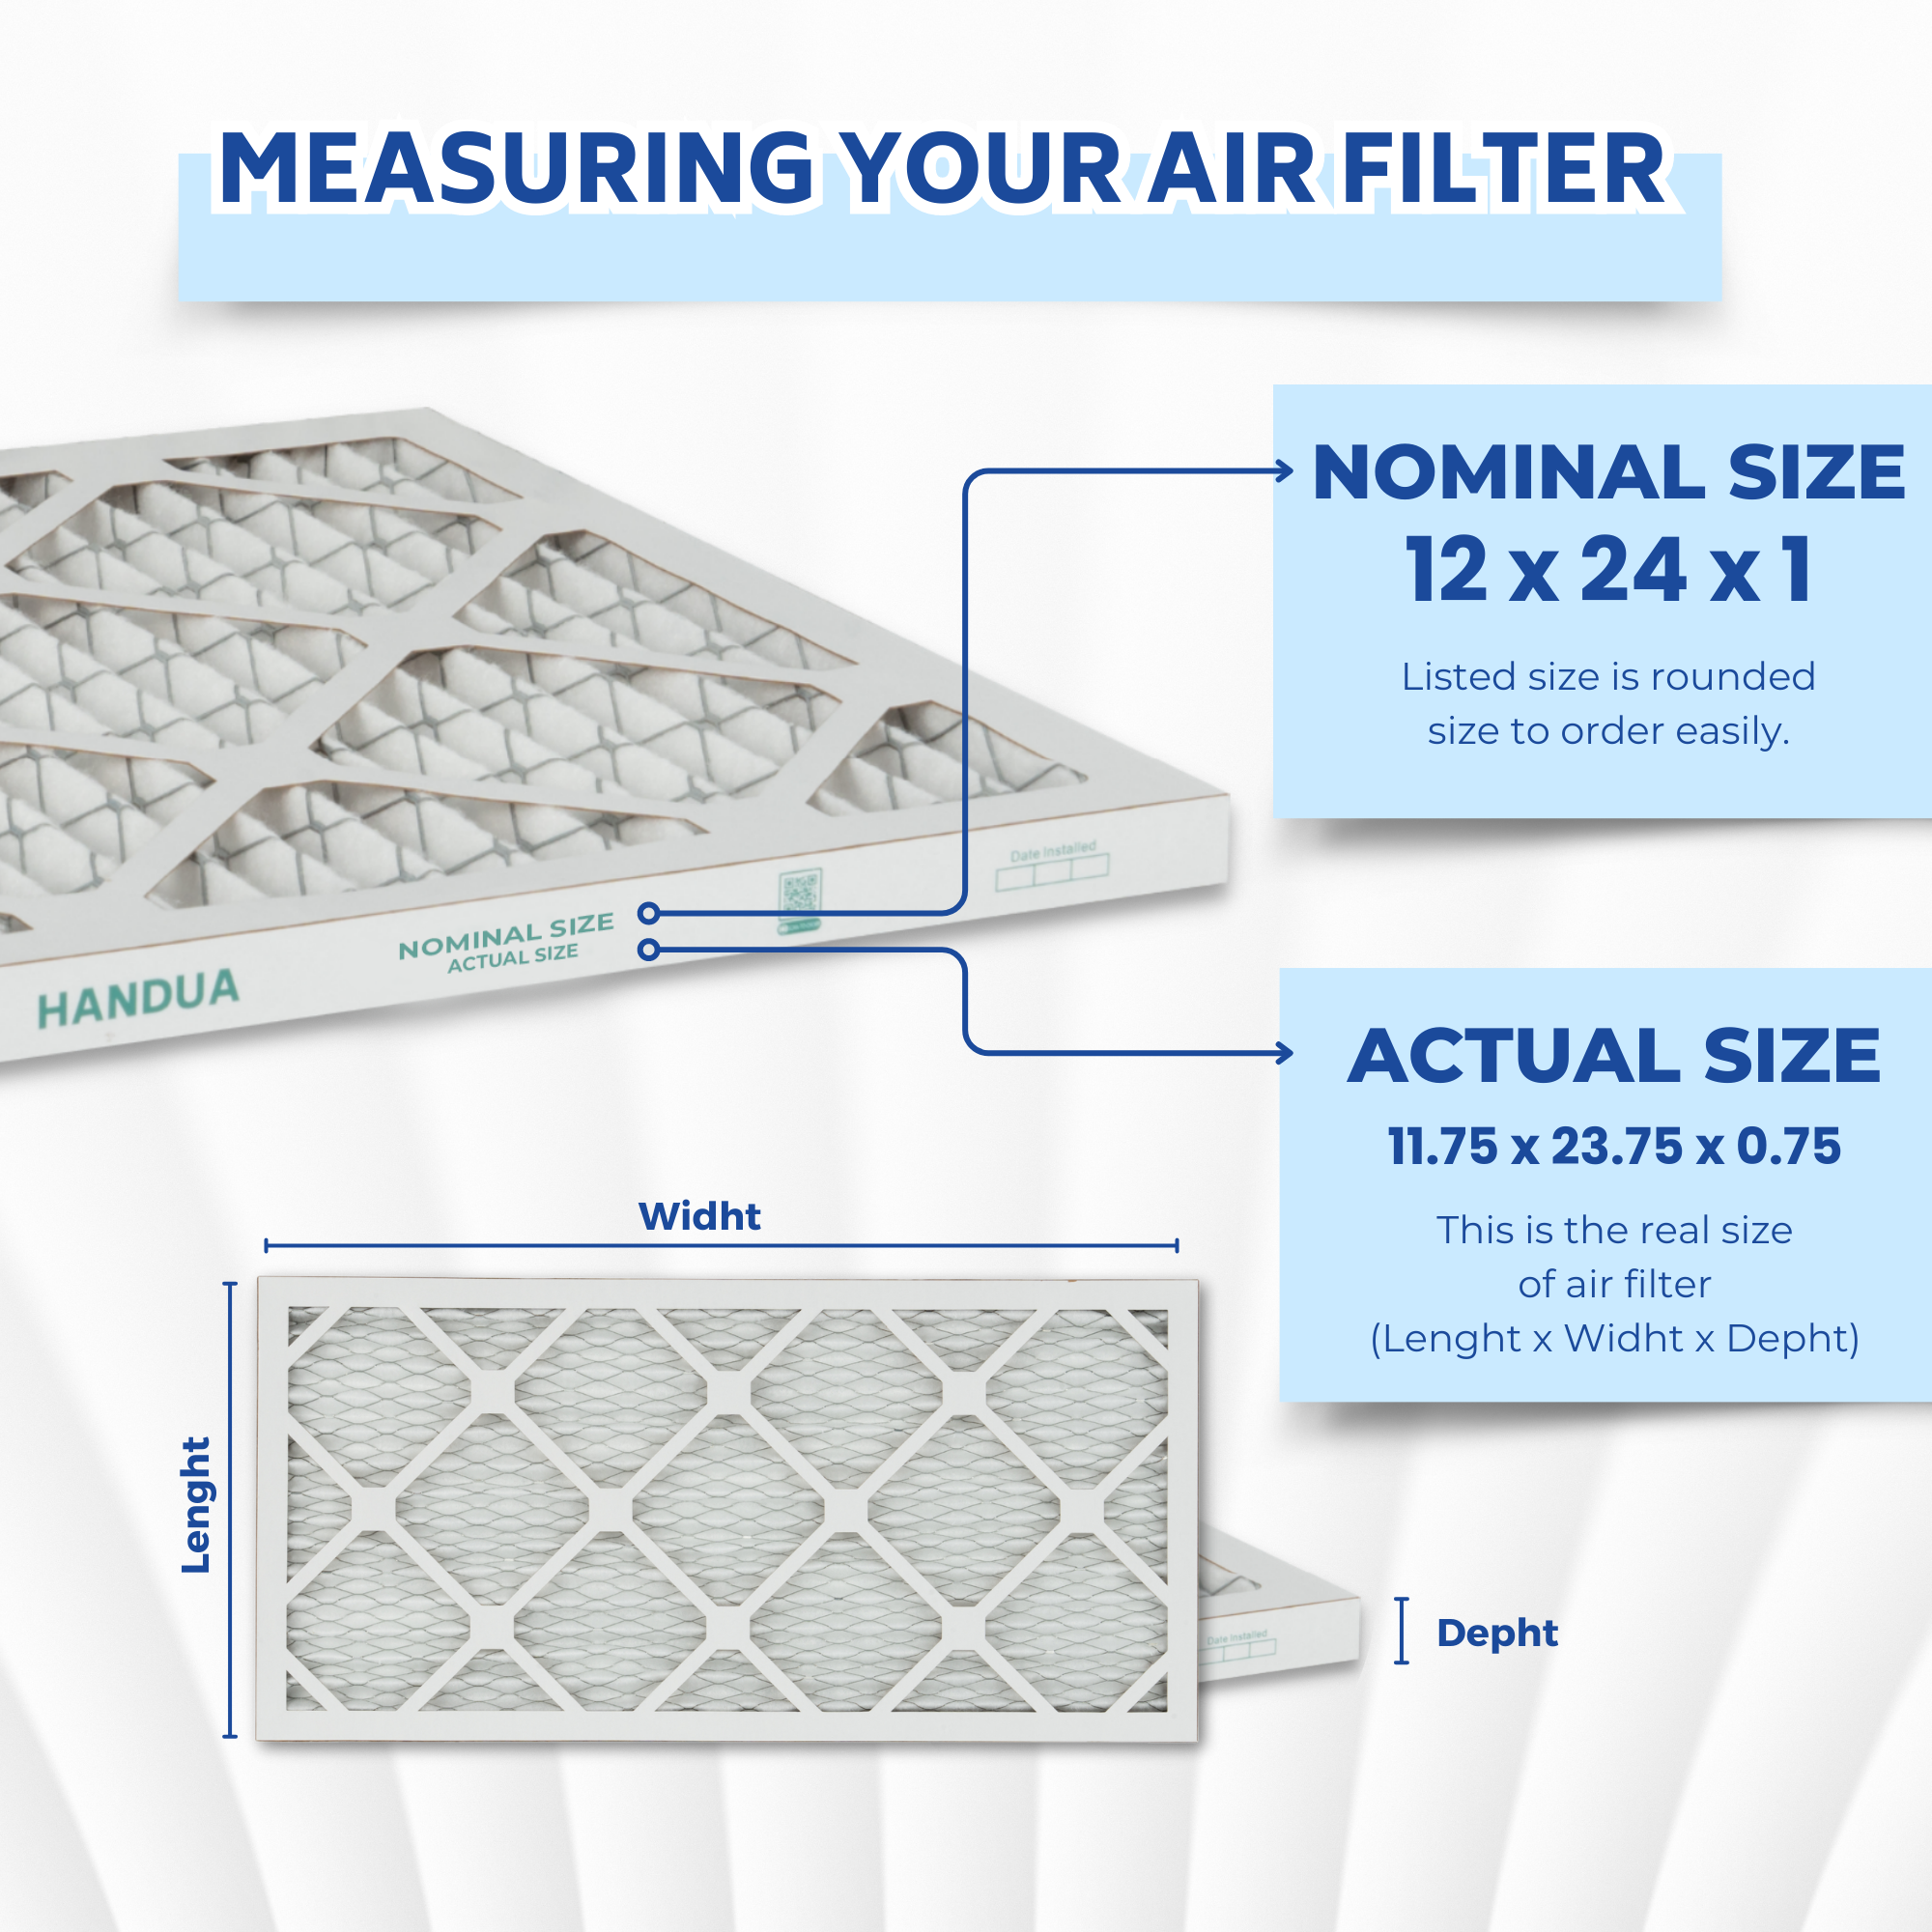 Handua 12x24x1 Air Filter MERV 13 Optimal Control, Plated Furnace AC Air Replacement Filter, 4 Pack (Actual Size: 11.75" x 23.75" x 0.75")